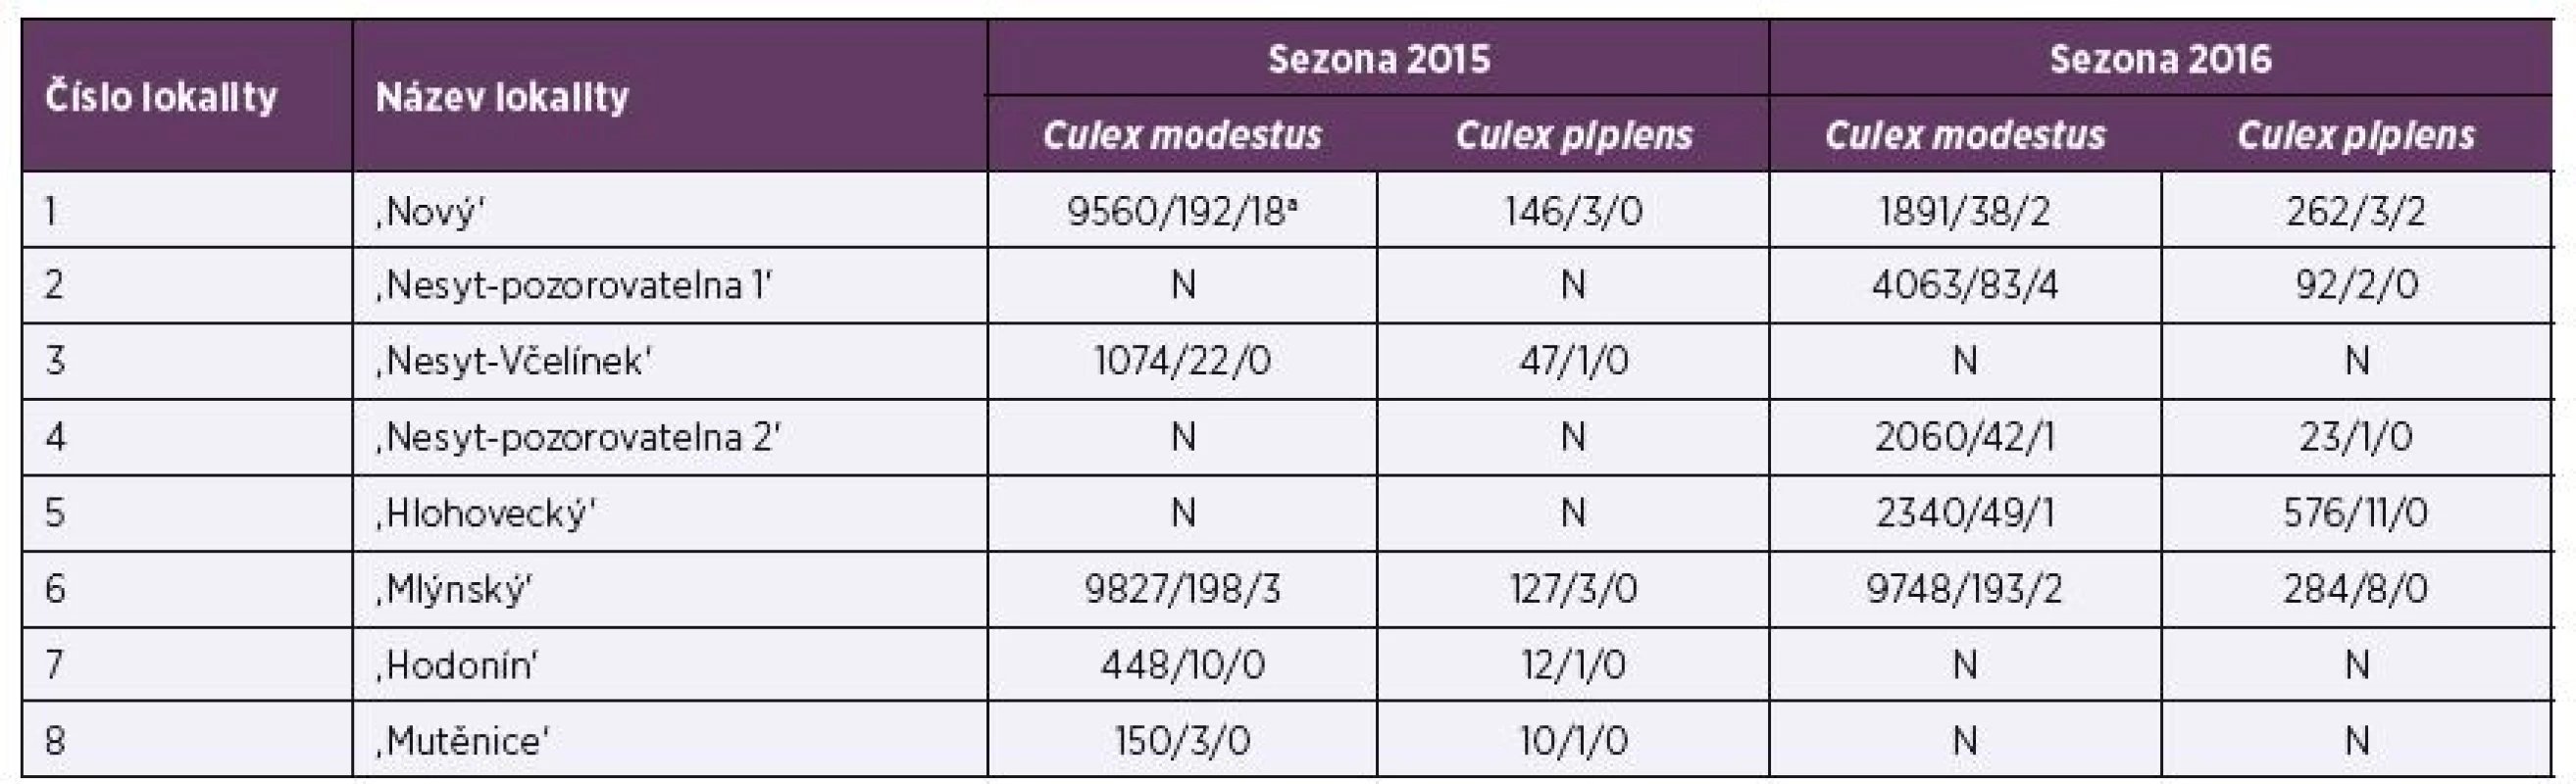 Prevalence WNV v komárech Culex modestus a Cx. pipiens na studijních plochách (2015, 2016)
Table 1. Minimal prevalence of WNV in Culex modestus and Cx. pipiens mosquitoes on study sites (2015, 2016).